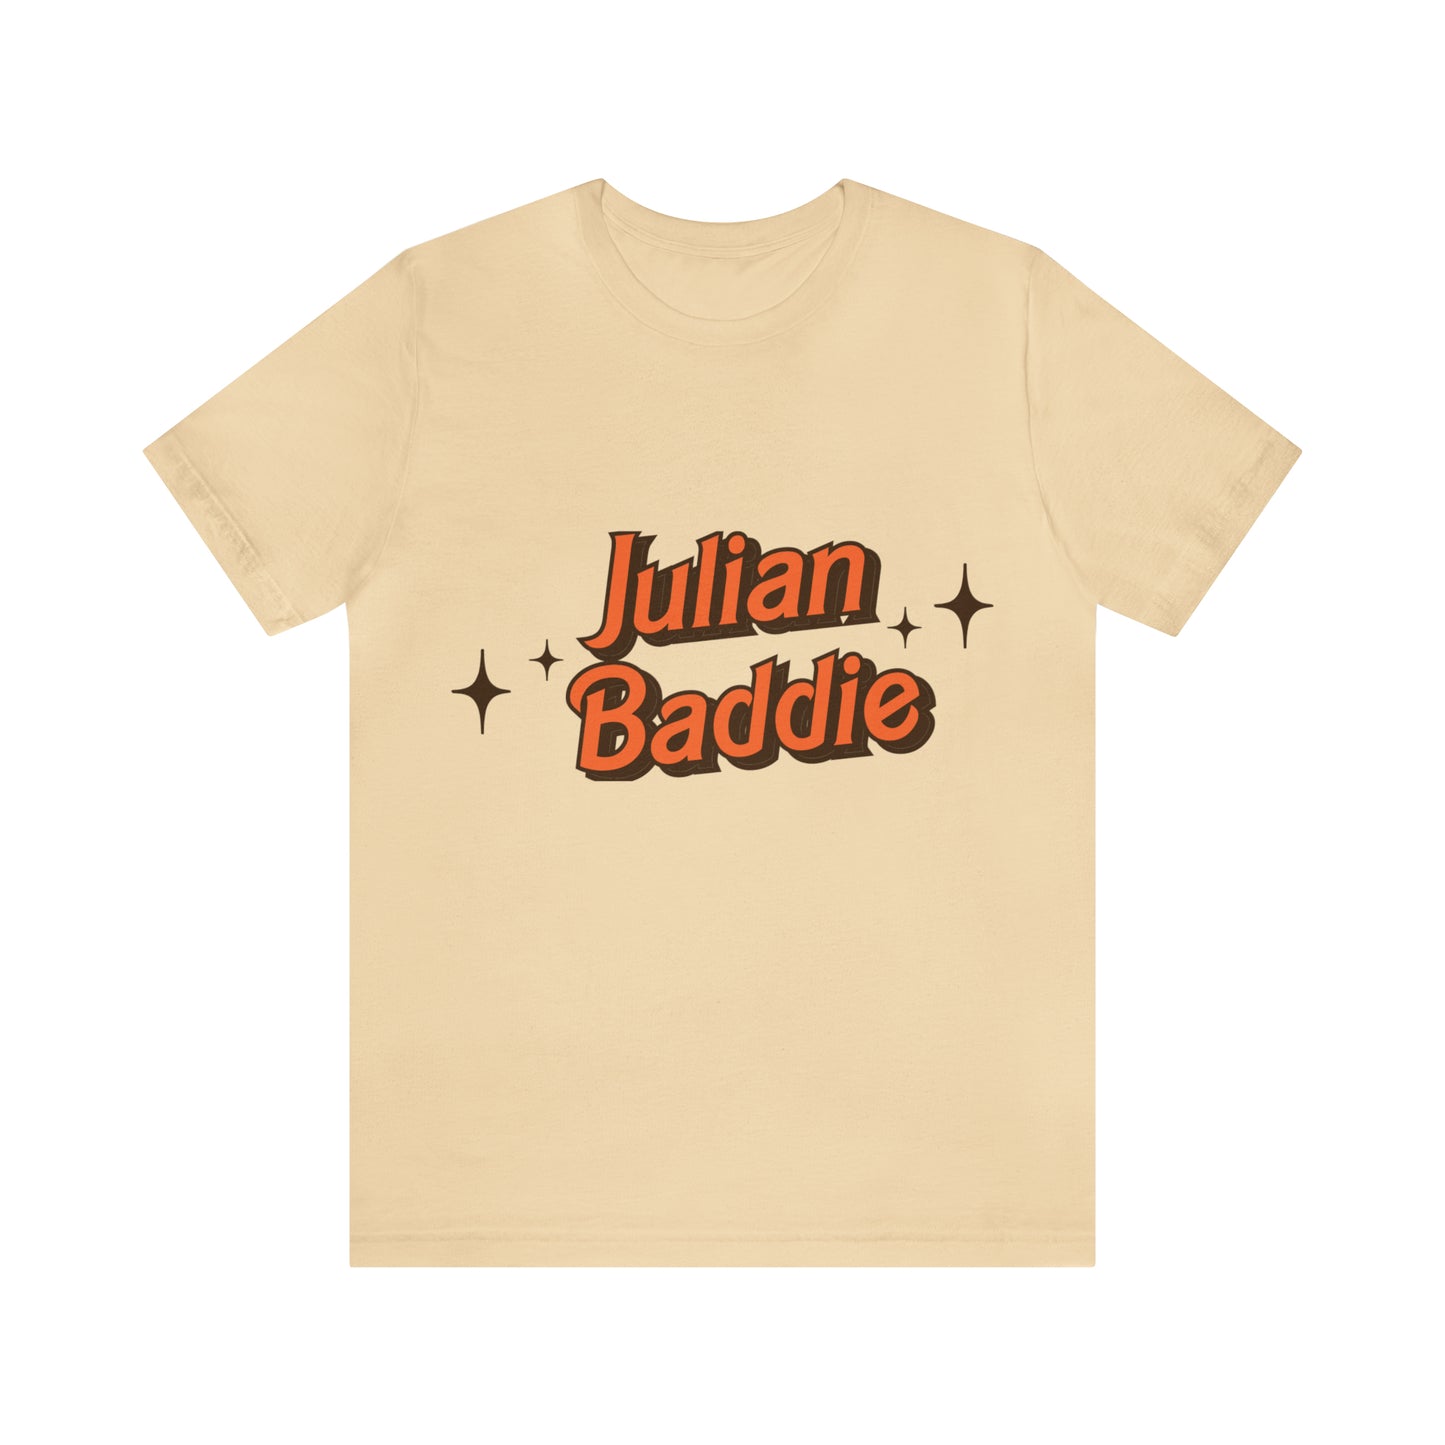 Julian Baddie Shirt | Chicago Public Schools Shirt